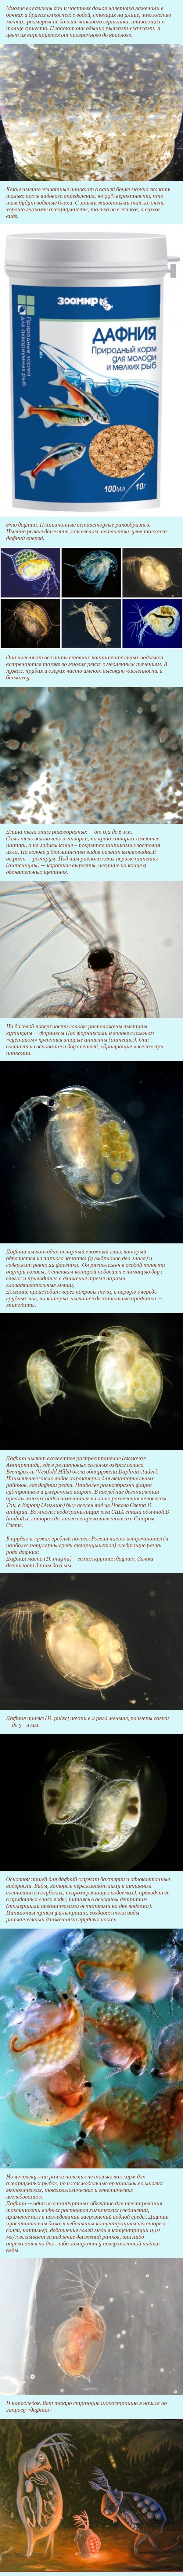 water fleas - Biology, Zoology, Hydrobiology, Longpost, Aquatic inhabitants